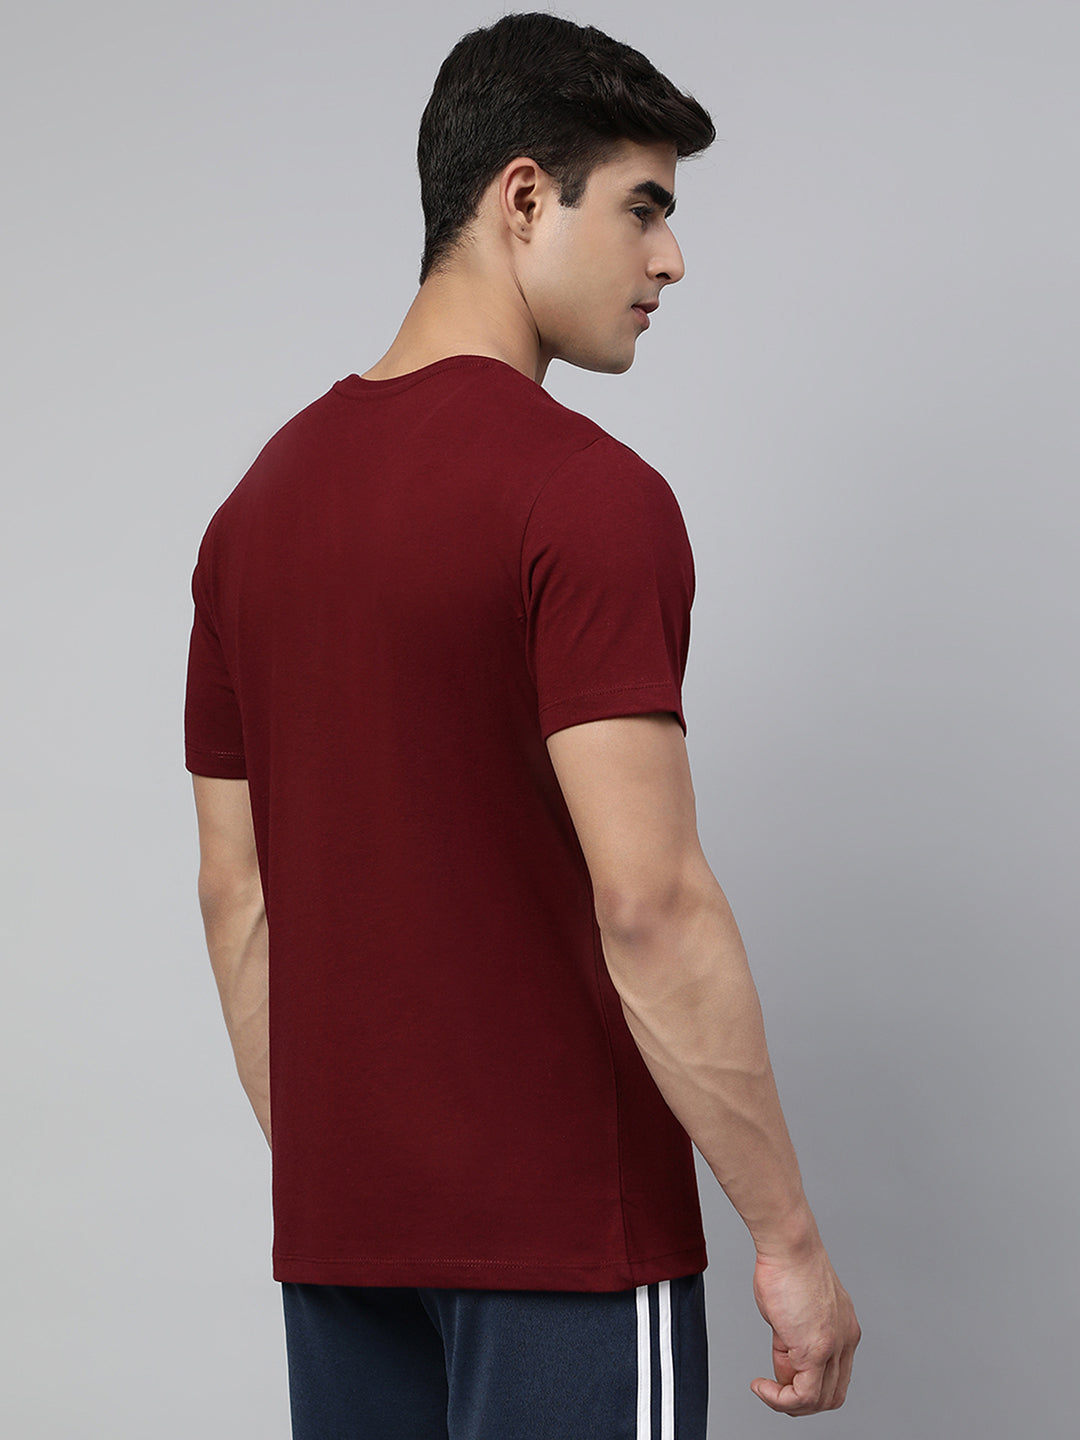 Alcis Men's Raisin Soft-Touch Regular-Fit Athleisure T-Shirt